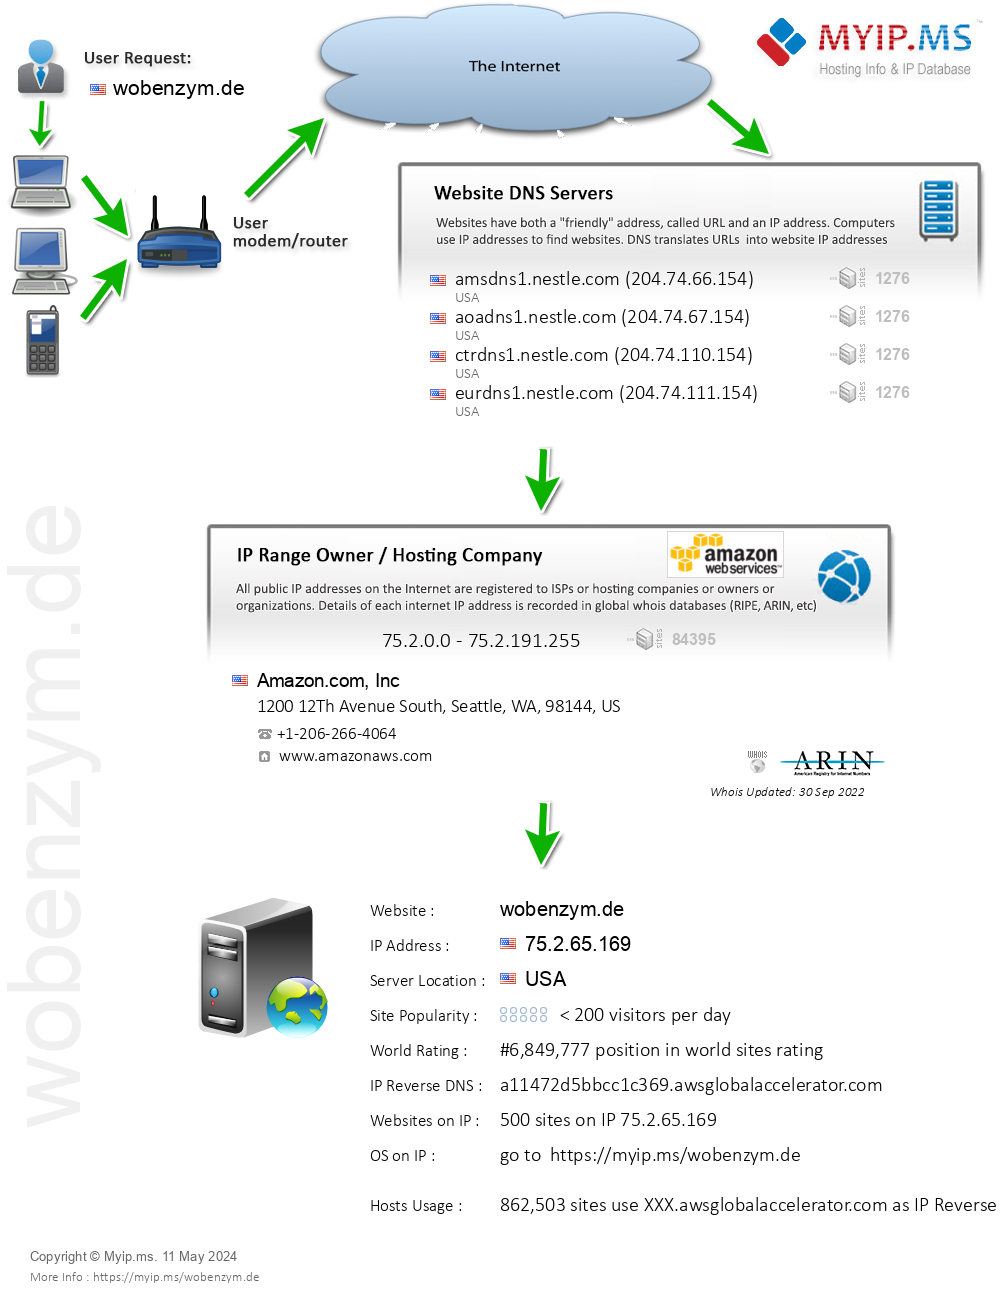 Wobenzym.de - Website Hosting Visual IP Diagram